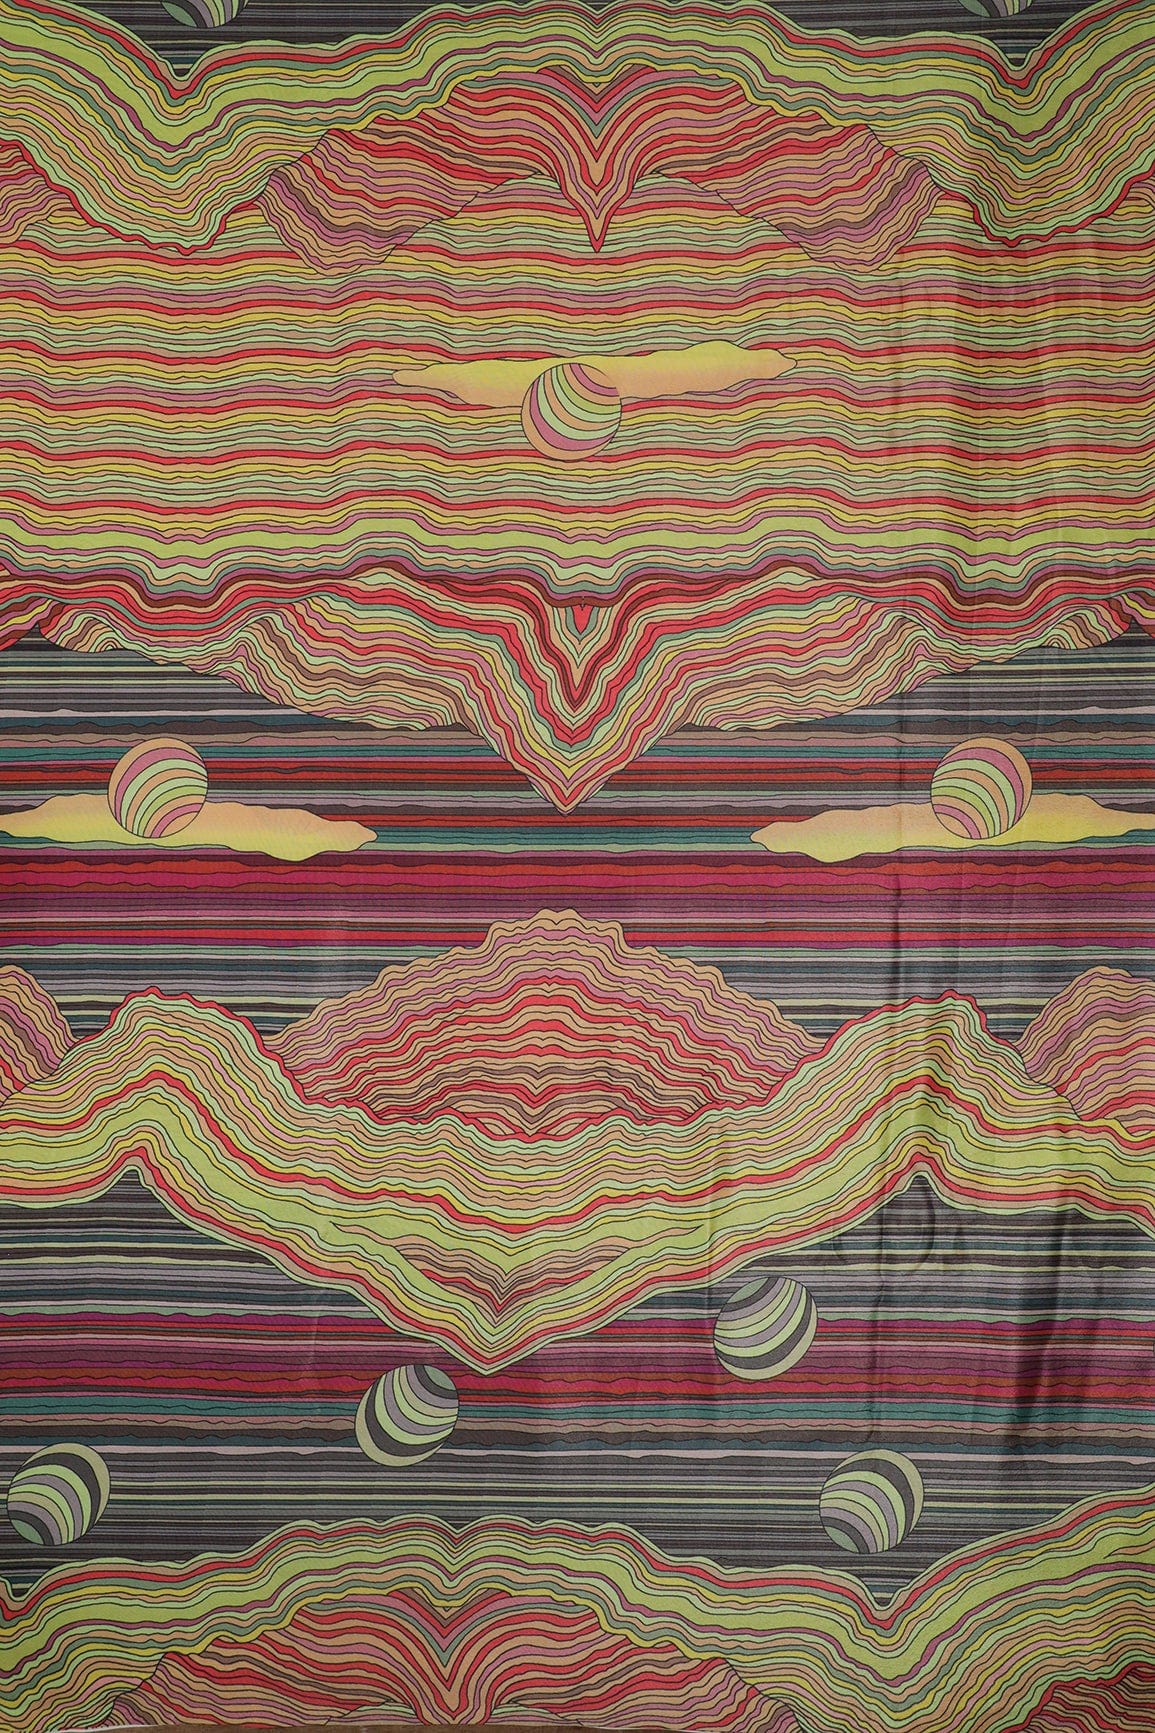 doeraa Prints Copy of Multi Color Abstract Pattern Digital Print On Malai Crepe Fabric